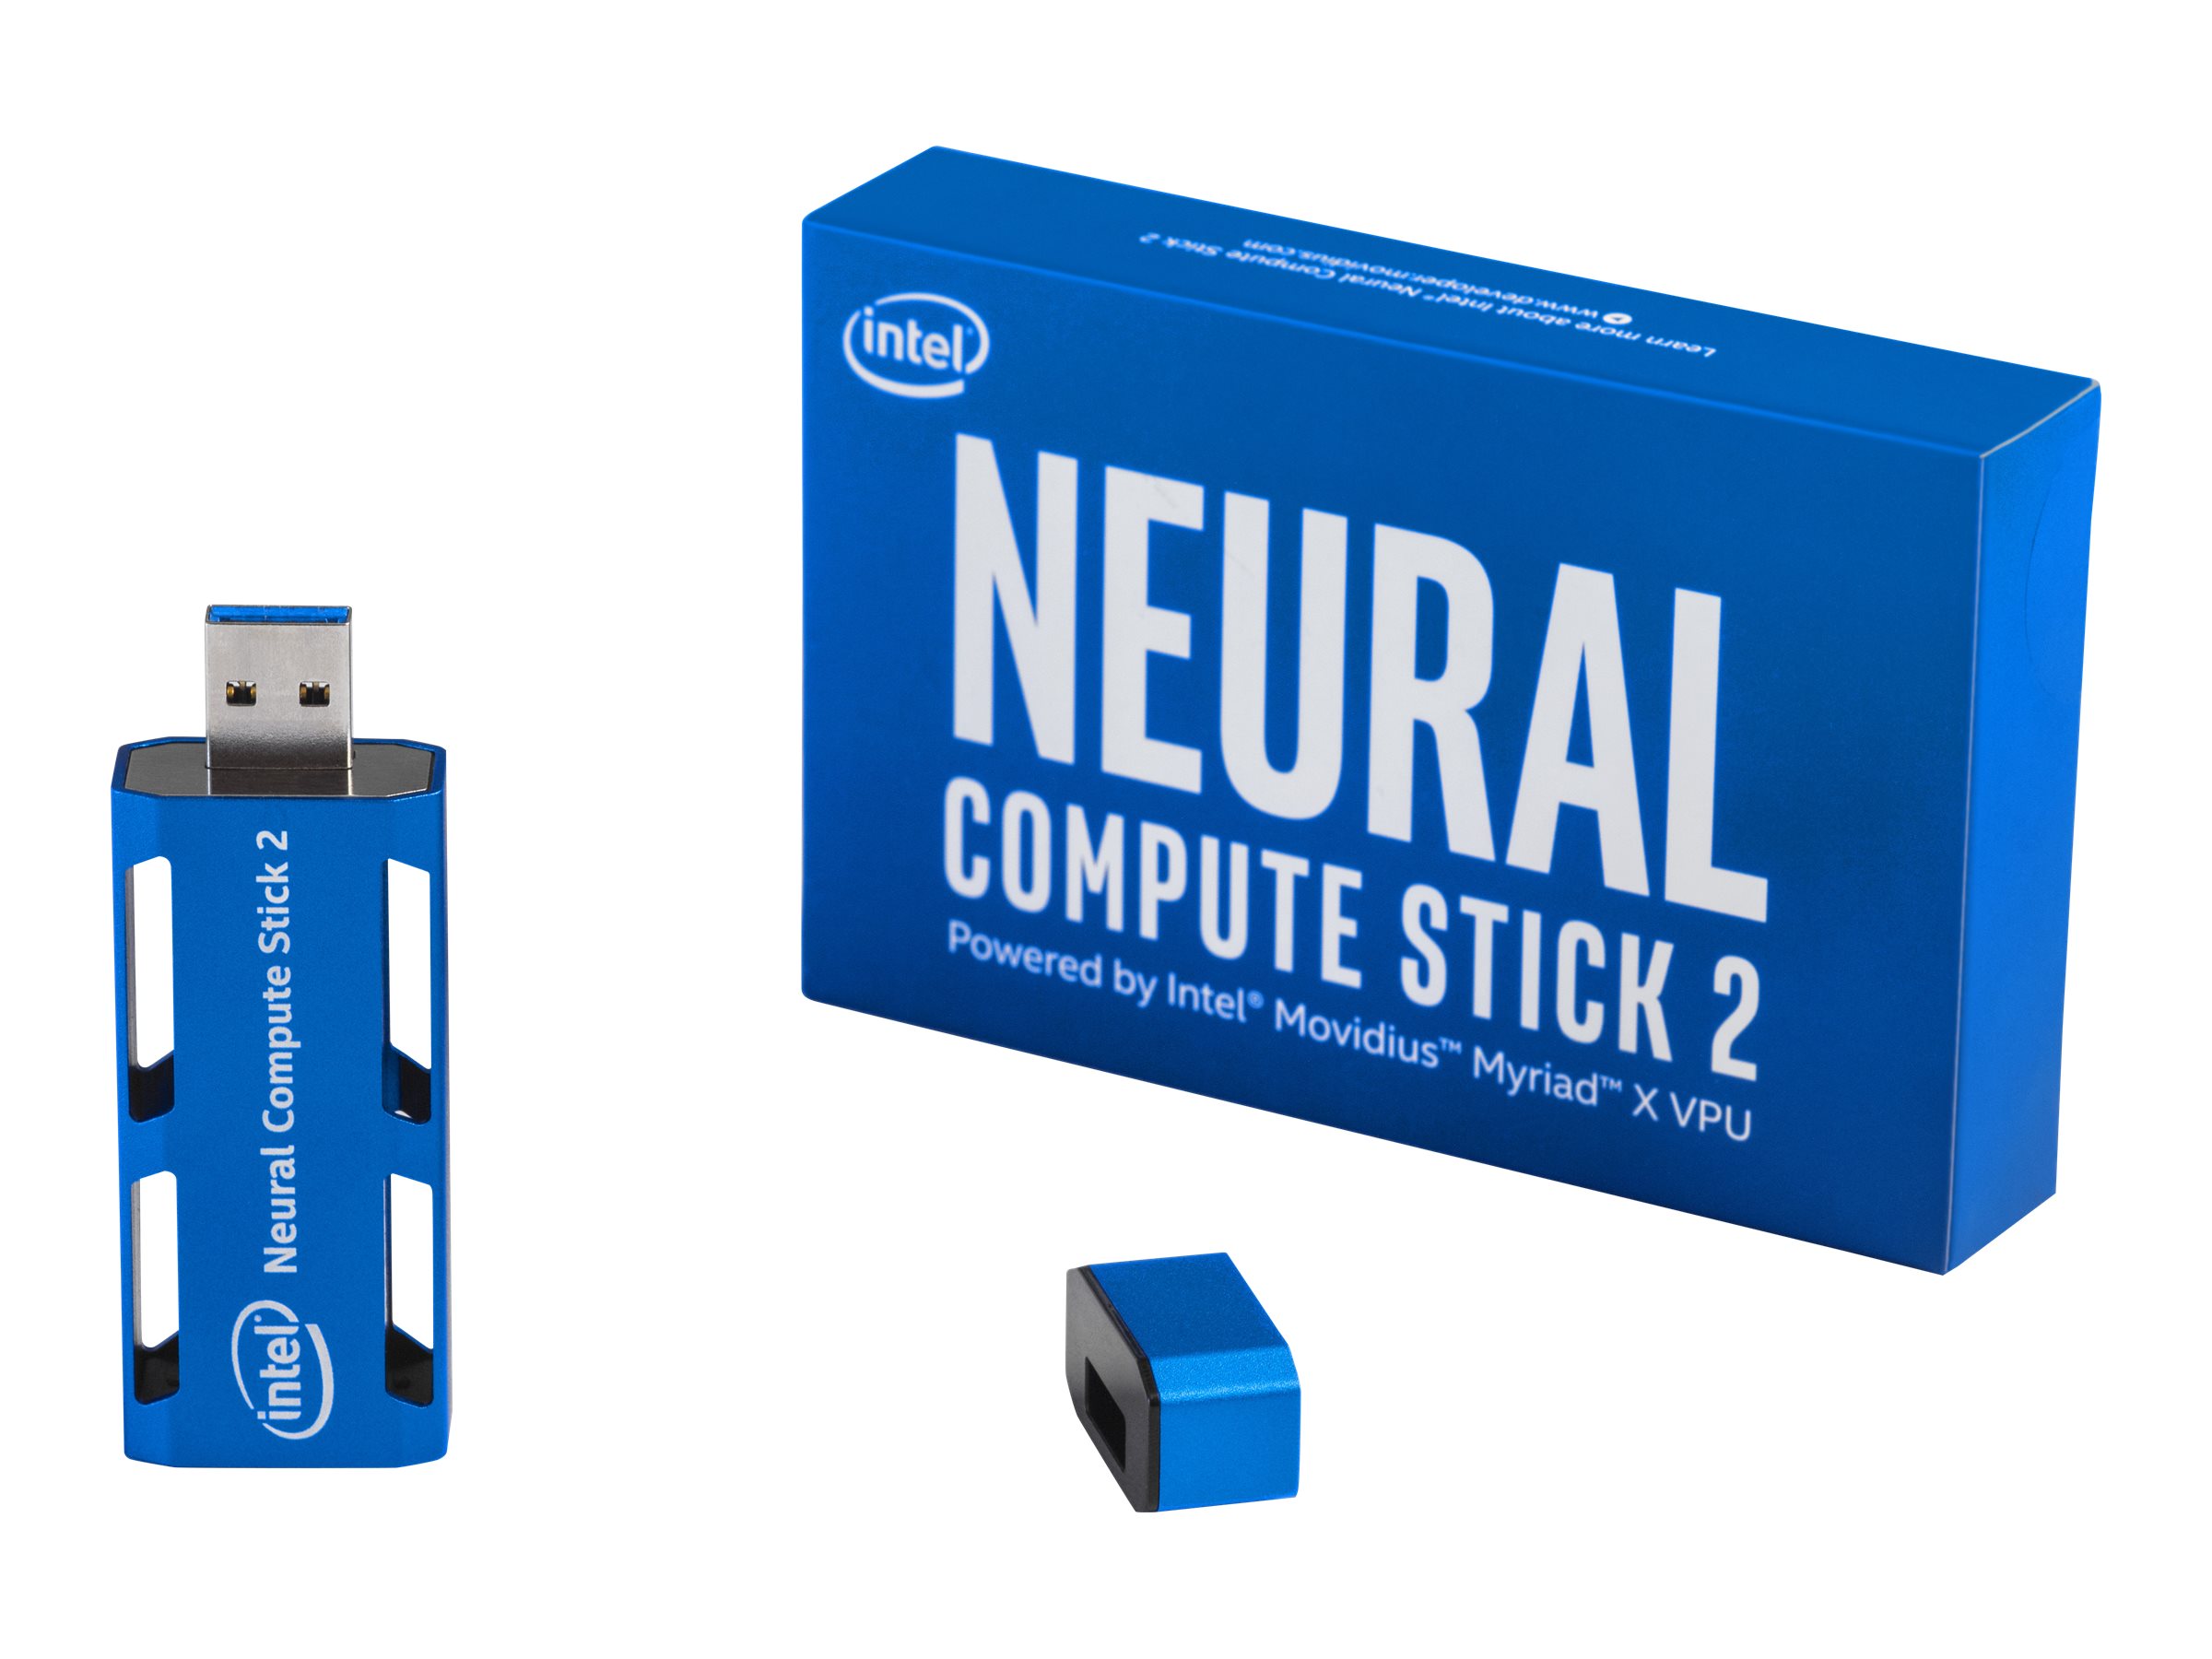 TensorFlowCaffeIntel Neural Compute Stick 2 - NCS 2